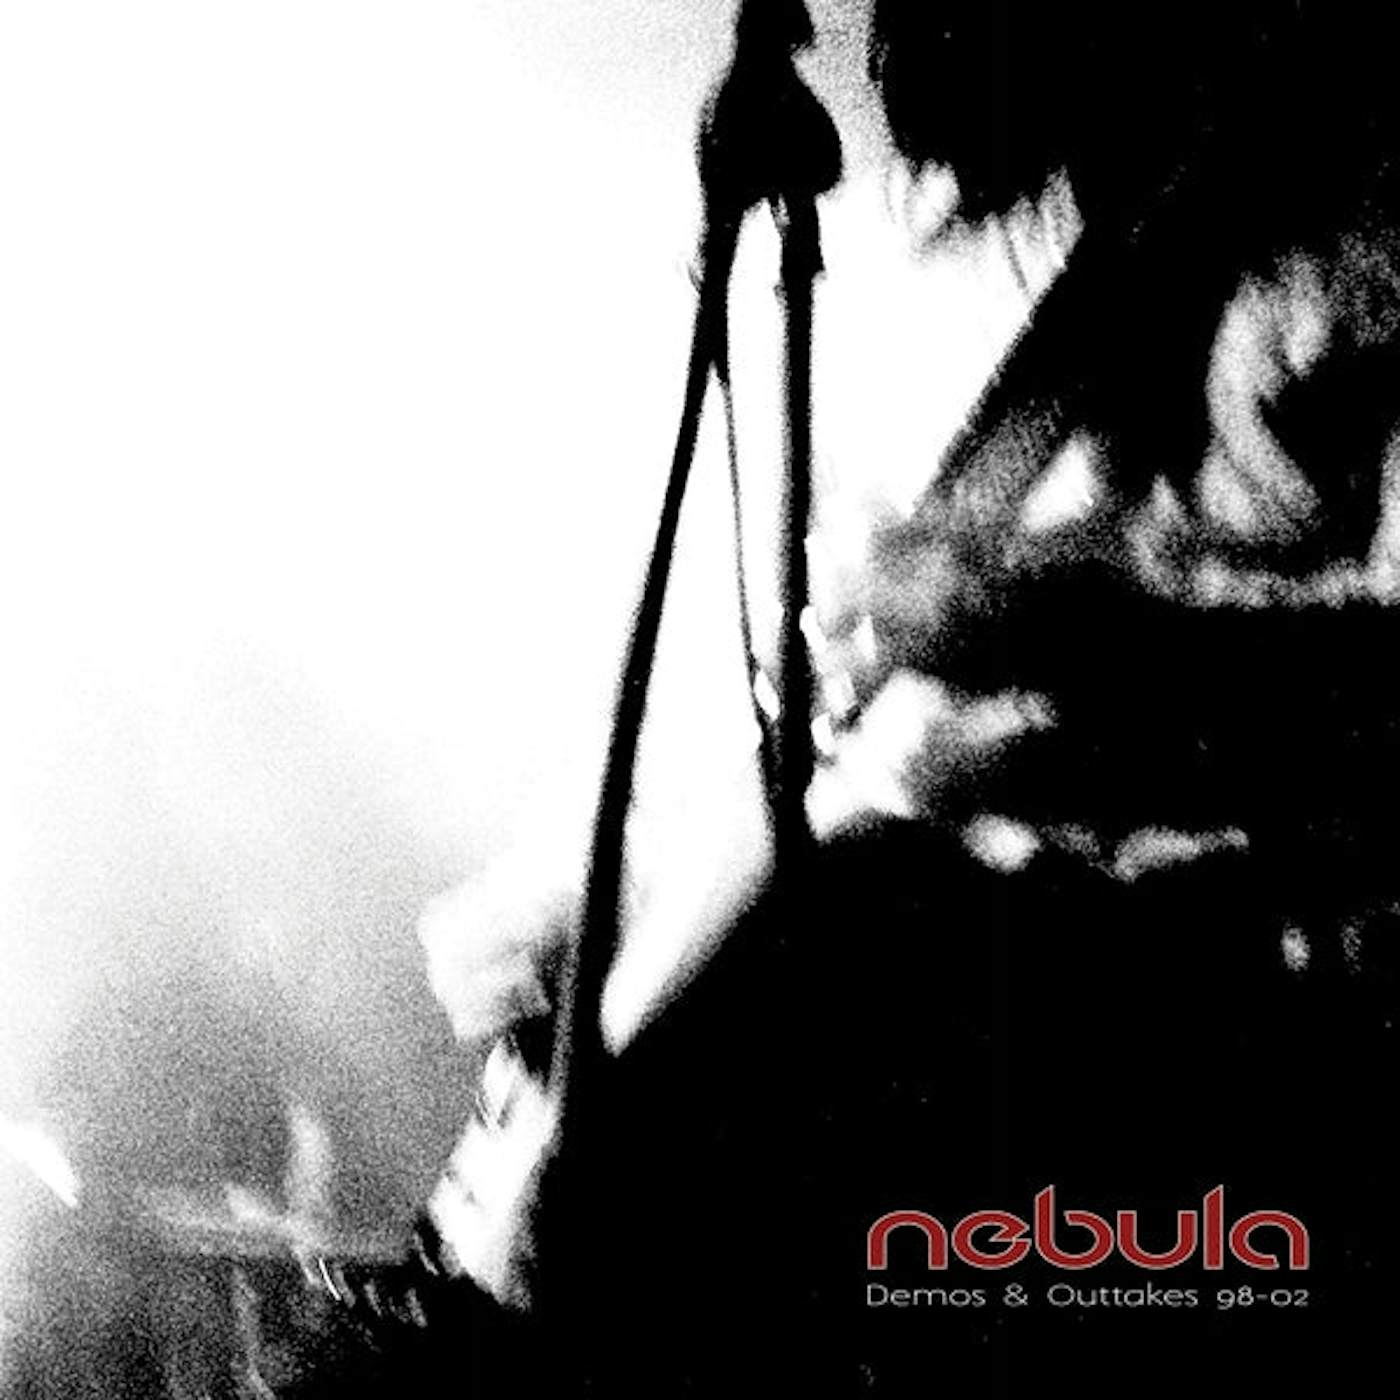 Nebula LP - Demos & Outtakes 98-03 (Vinyl)